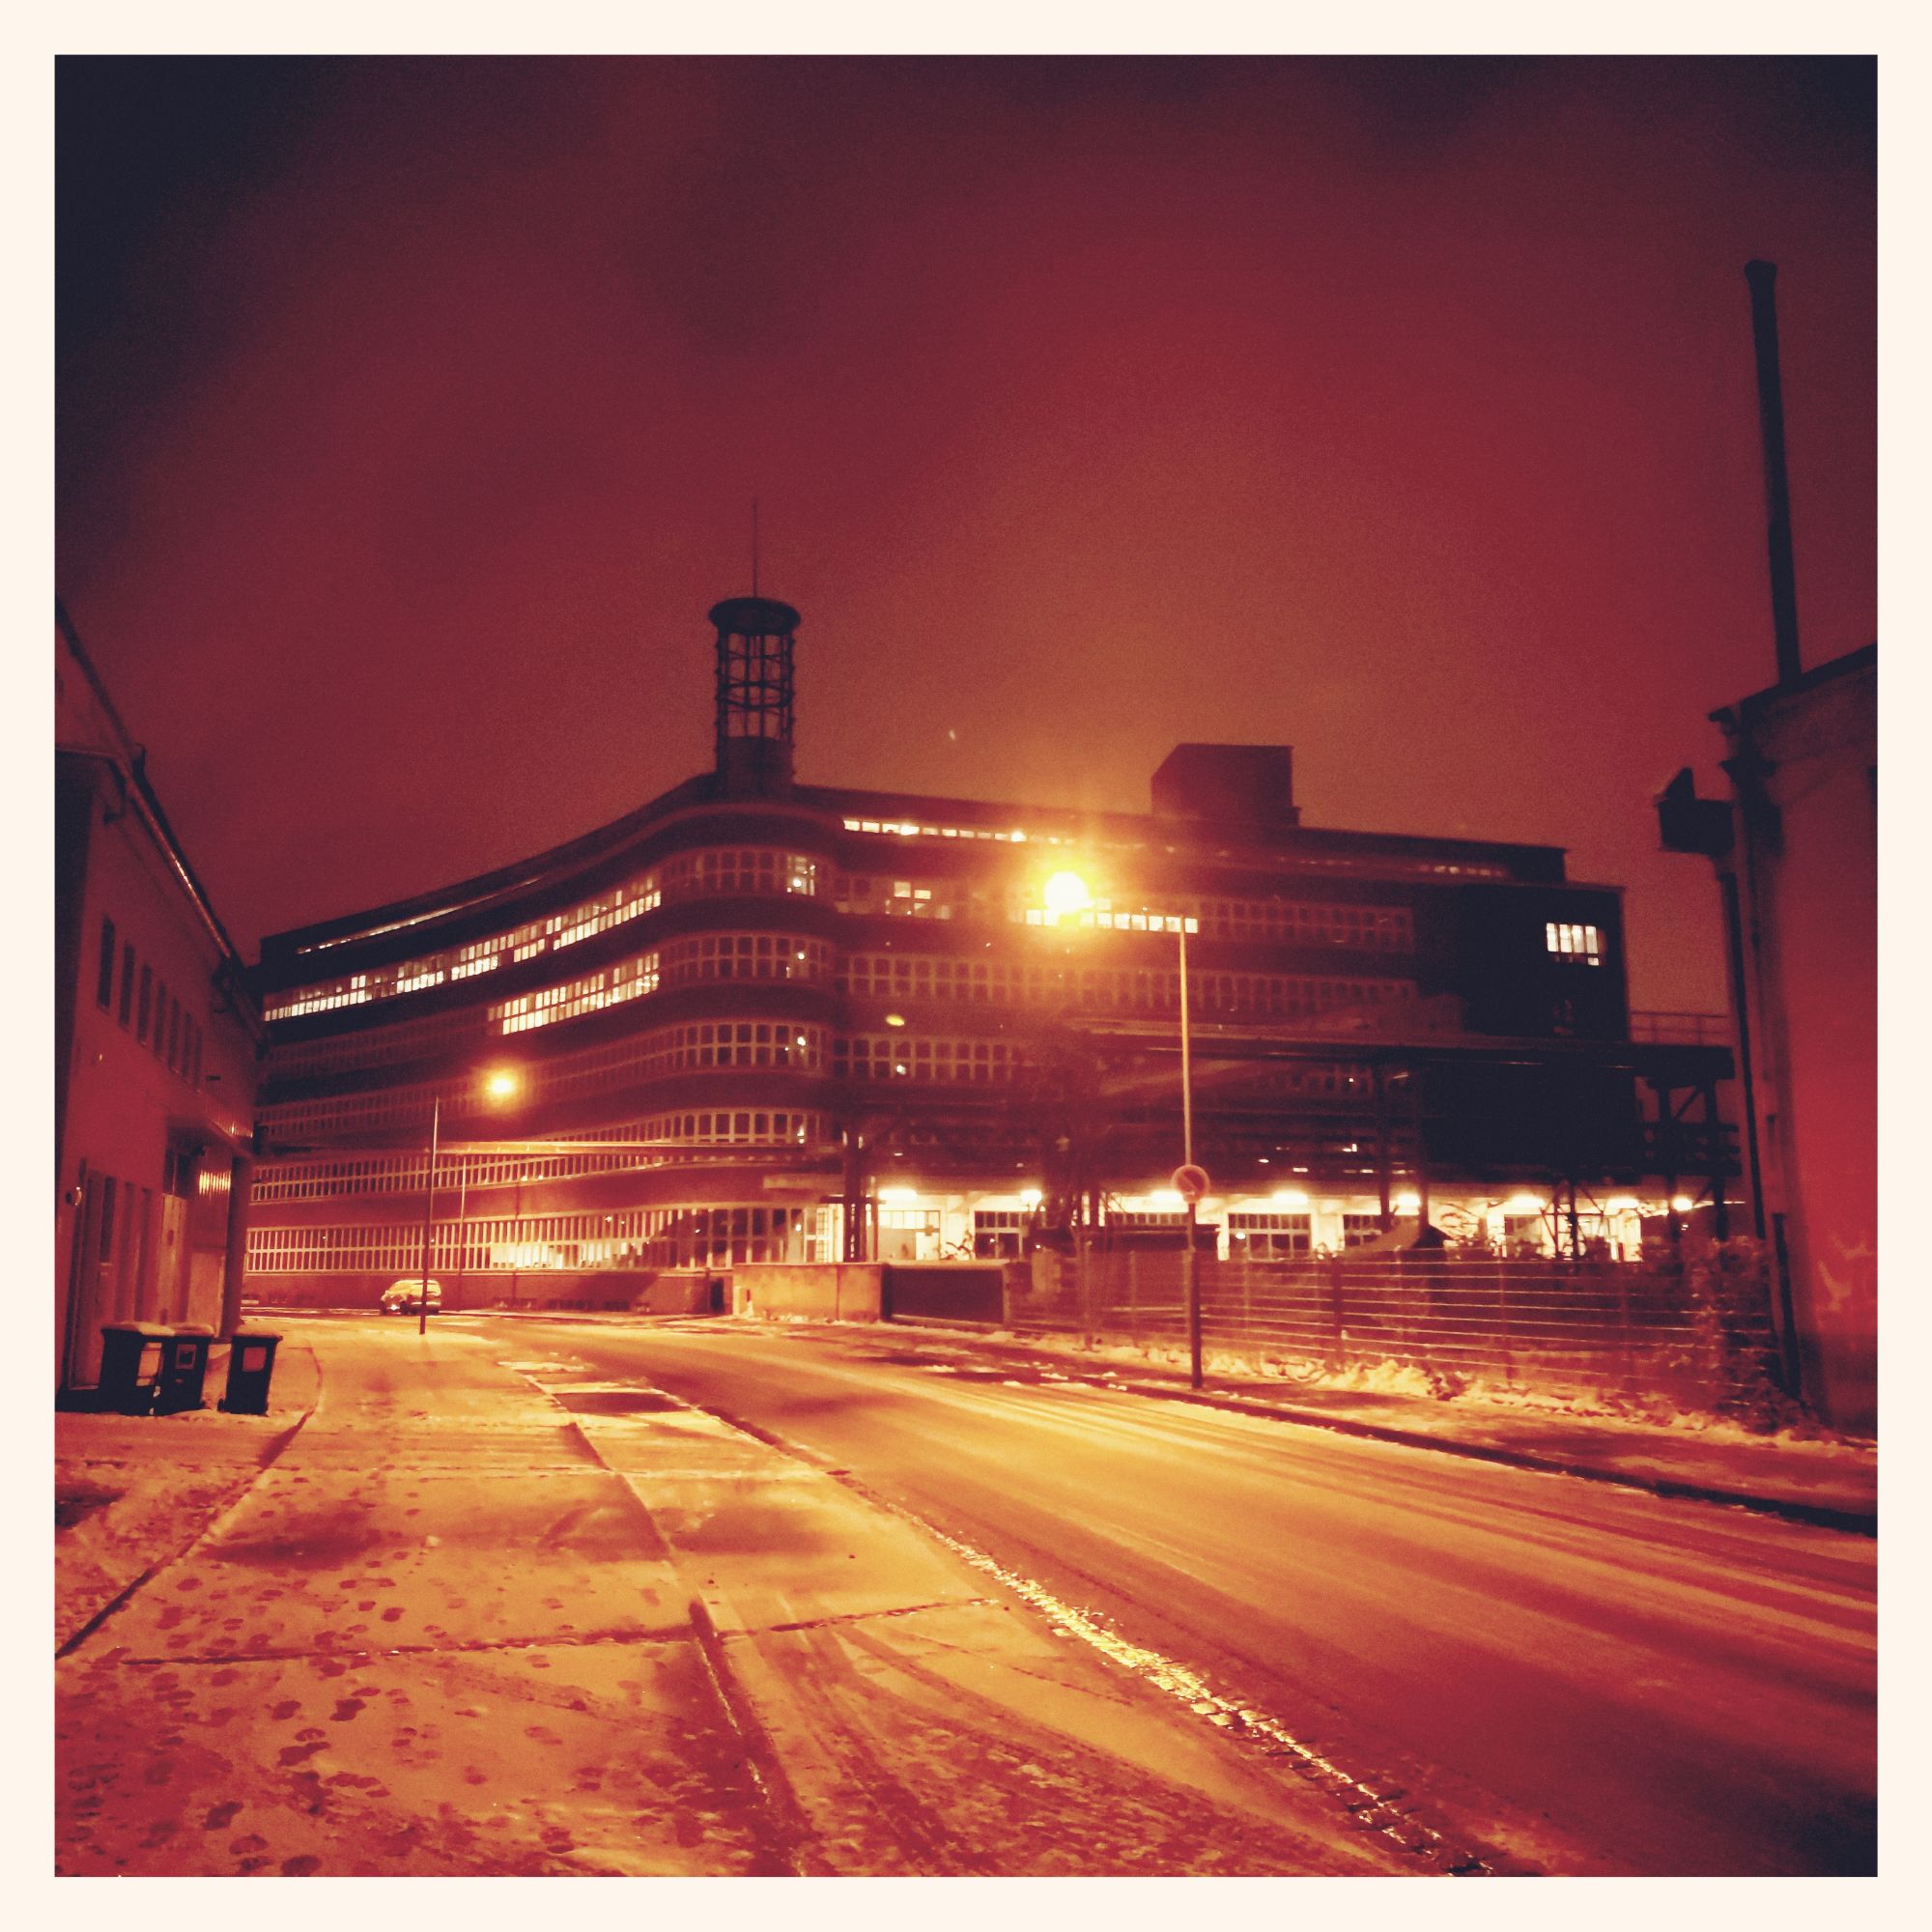 An old factory building near an empty street, late light.